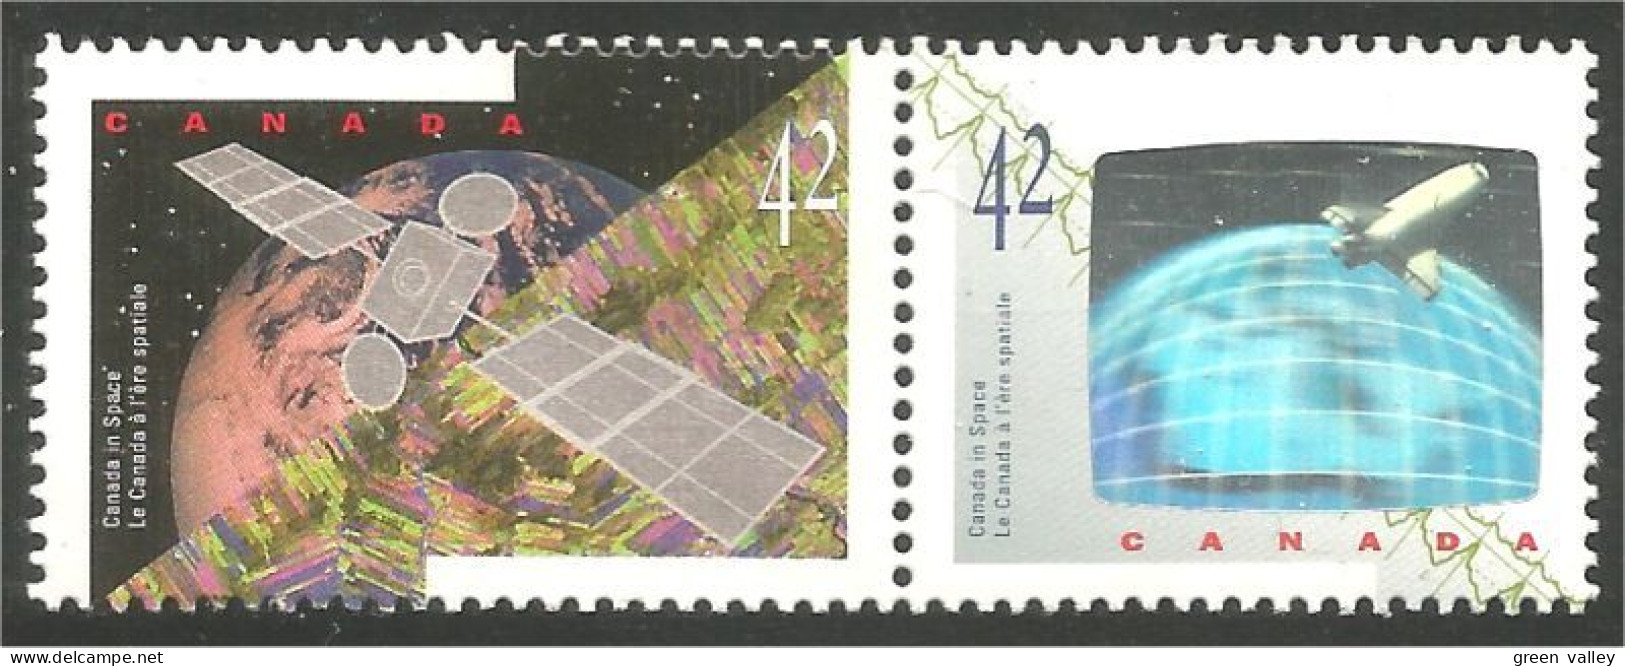 Canada Satellite ANIK E2 Navette Spatiale Shuttle Hologramme Se-tenant MNH ** Neuf SC (C14-42aa) - Neufs